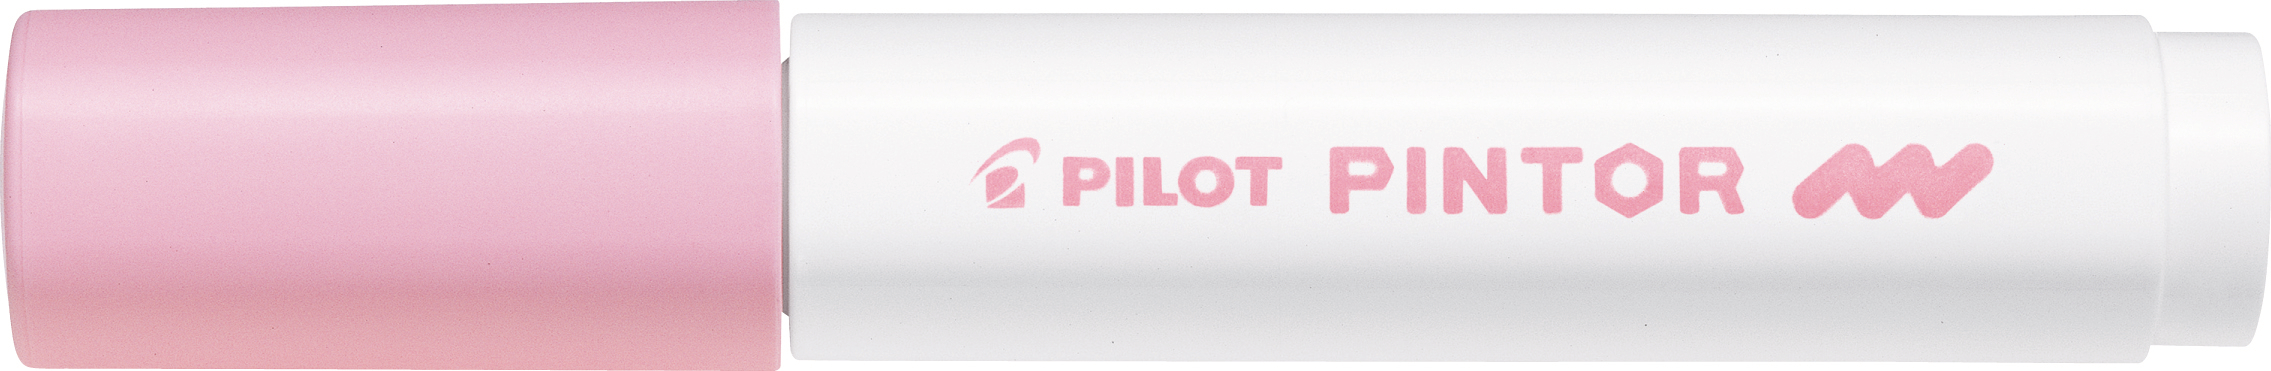 PILOT Marker Pintor M SW-PT-M-PP pastell pink